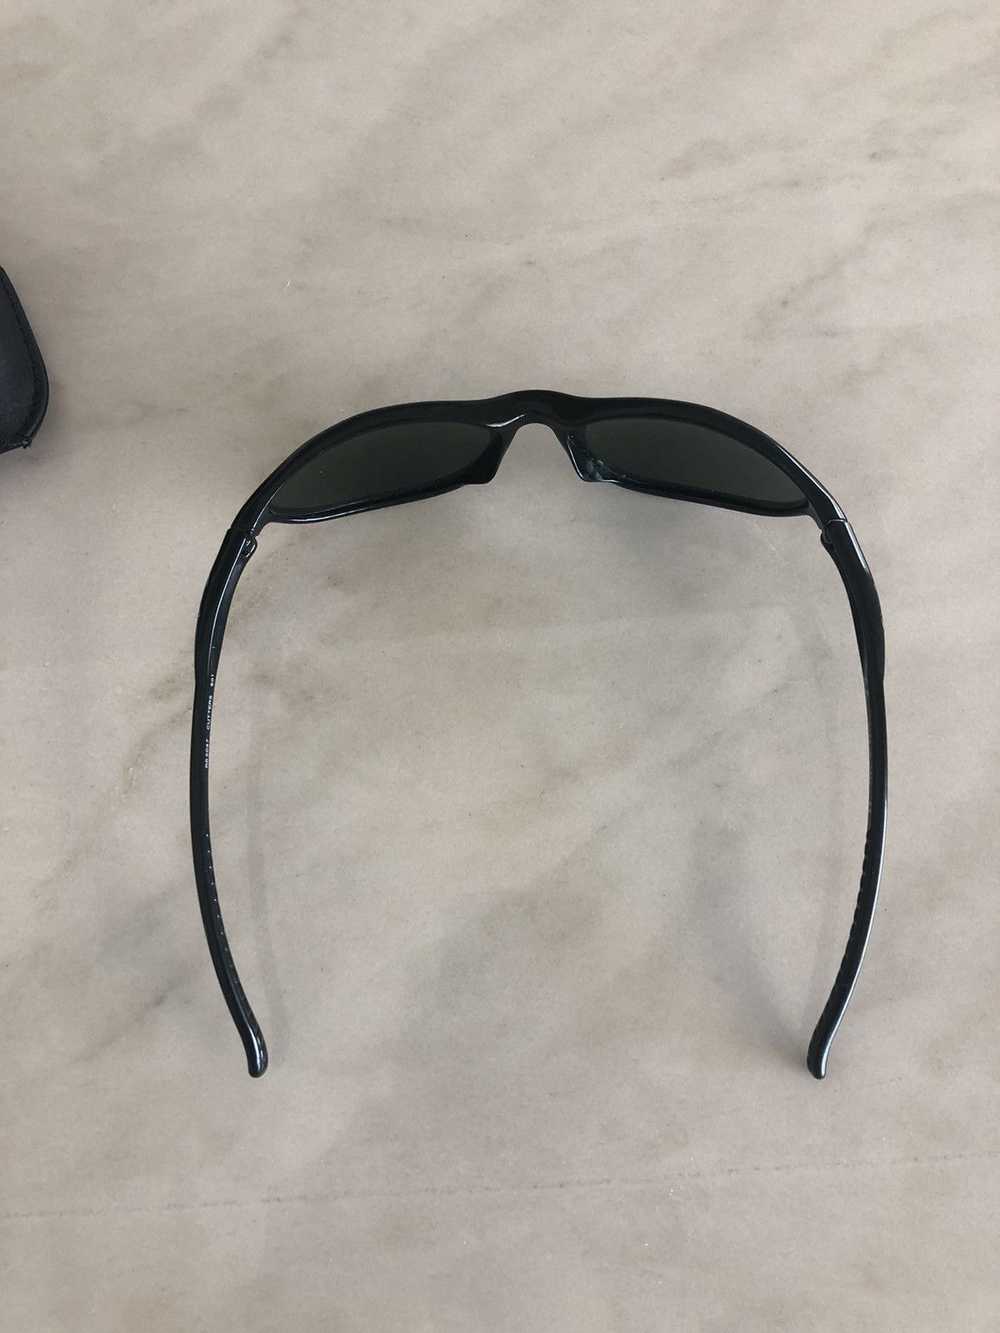 RayBan Rayban 90s Cutters Wrap Around Sunglasses - image 3